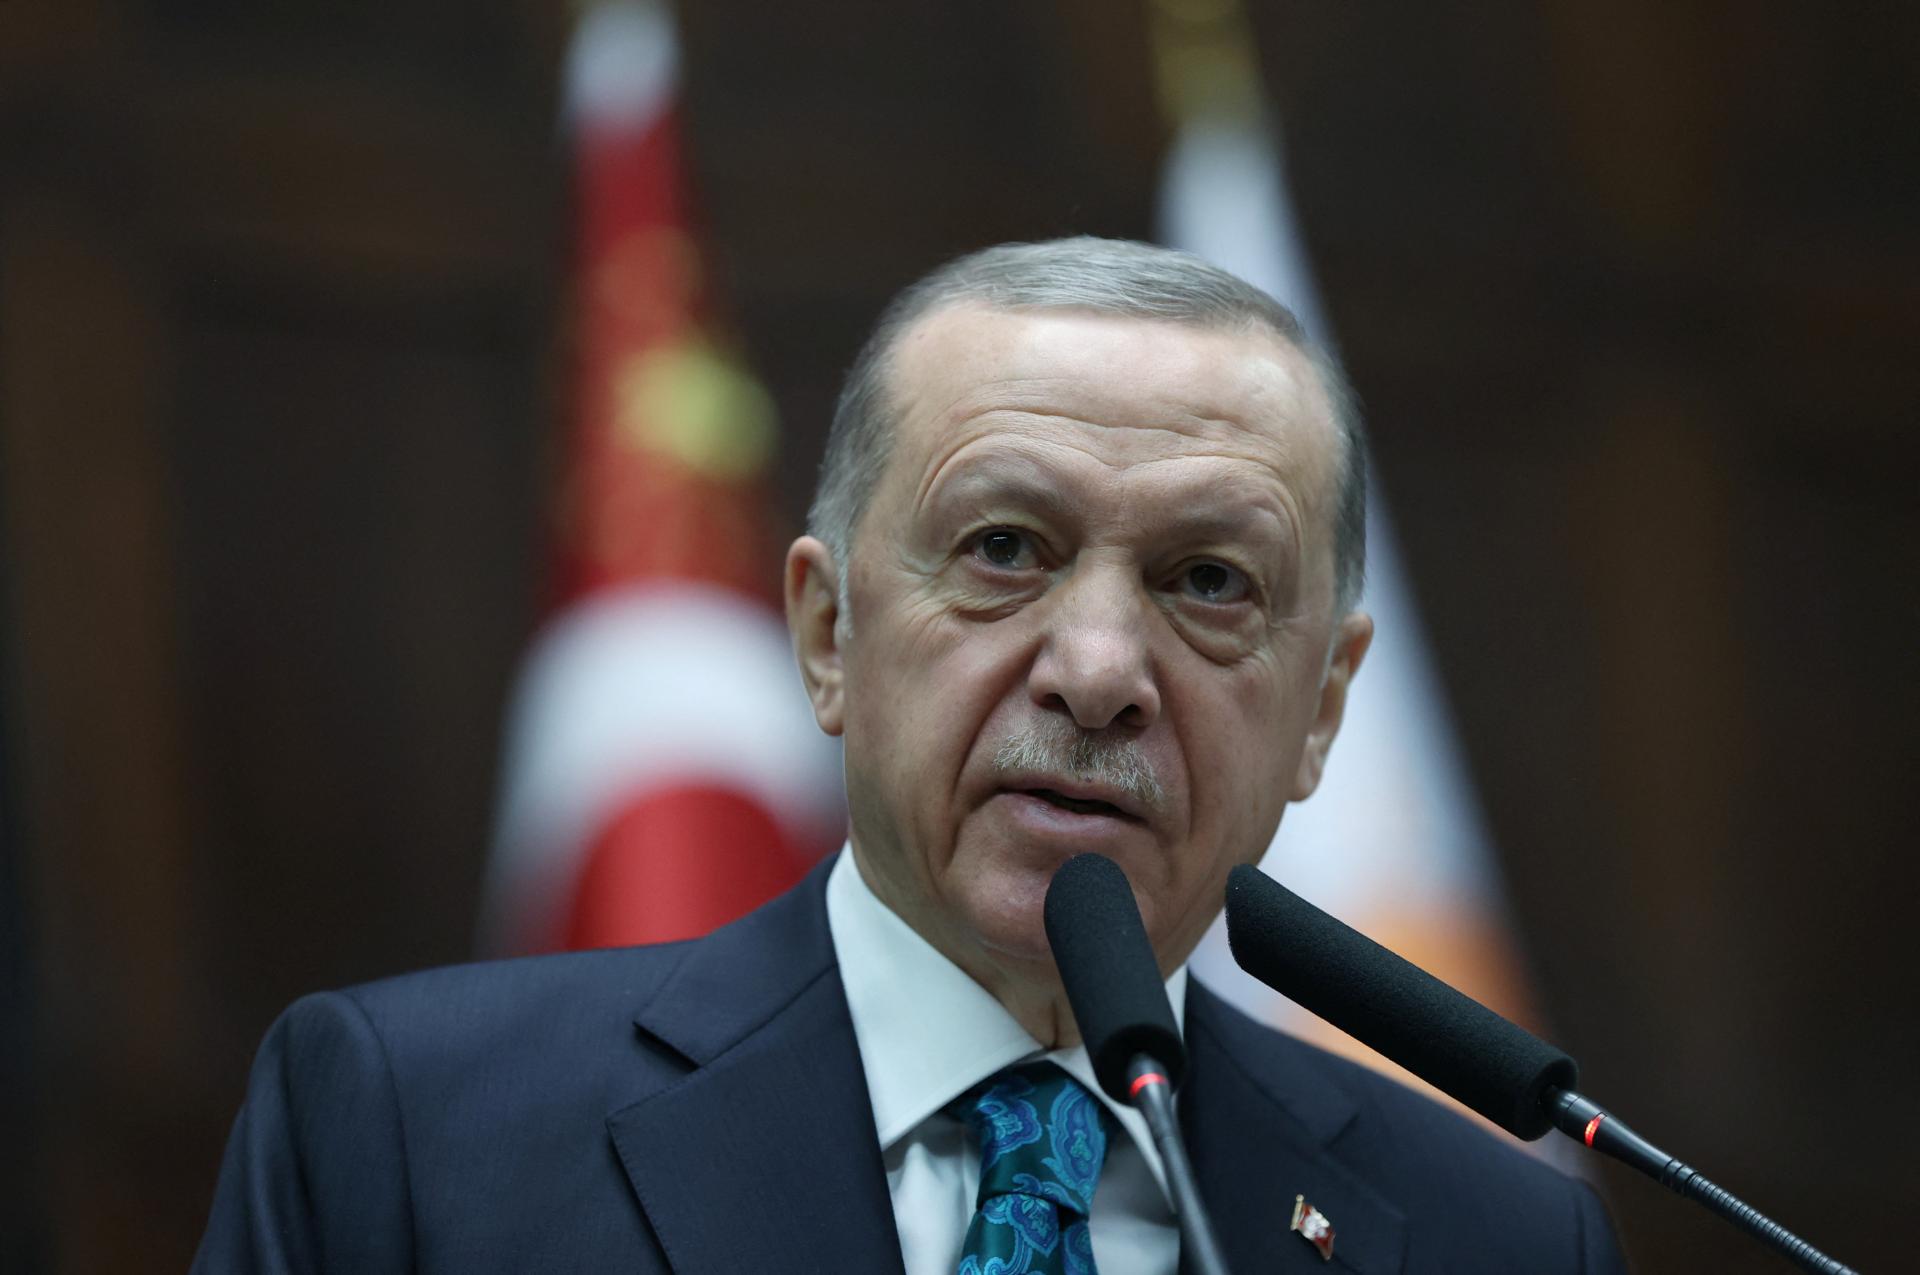 Turecko udržiava dialóg s Ukrajinou i s Ruskom, povedal Erdogan po schôdzke s Novákovou